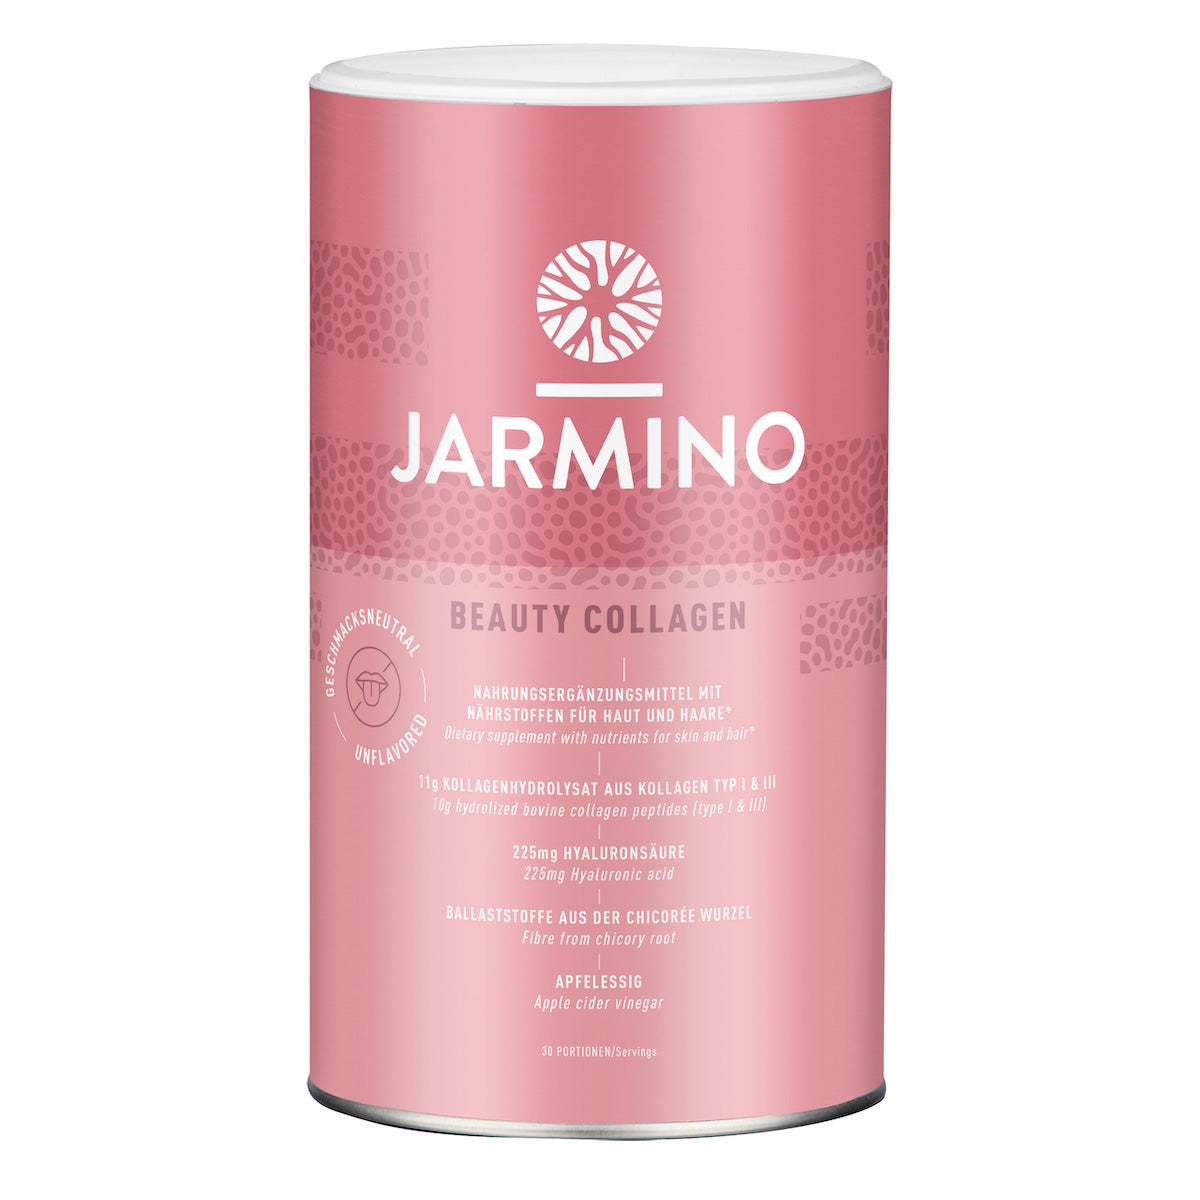 Collagène de beauté 450g - Jarmino – Allmyketo